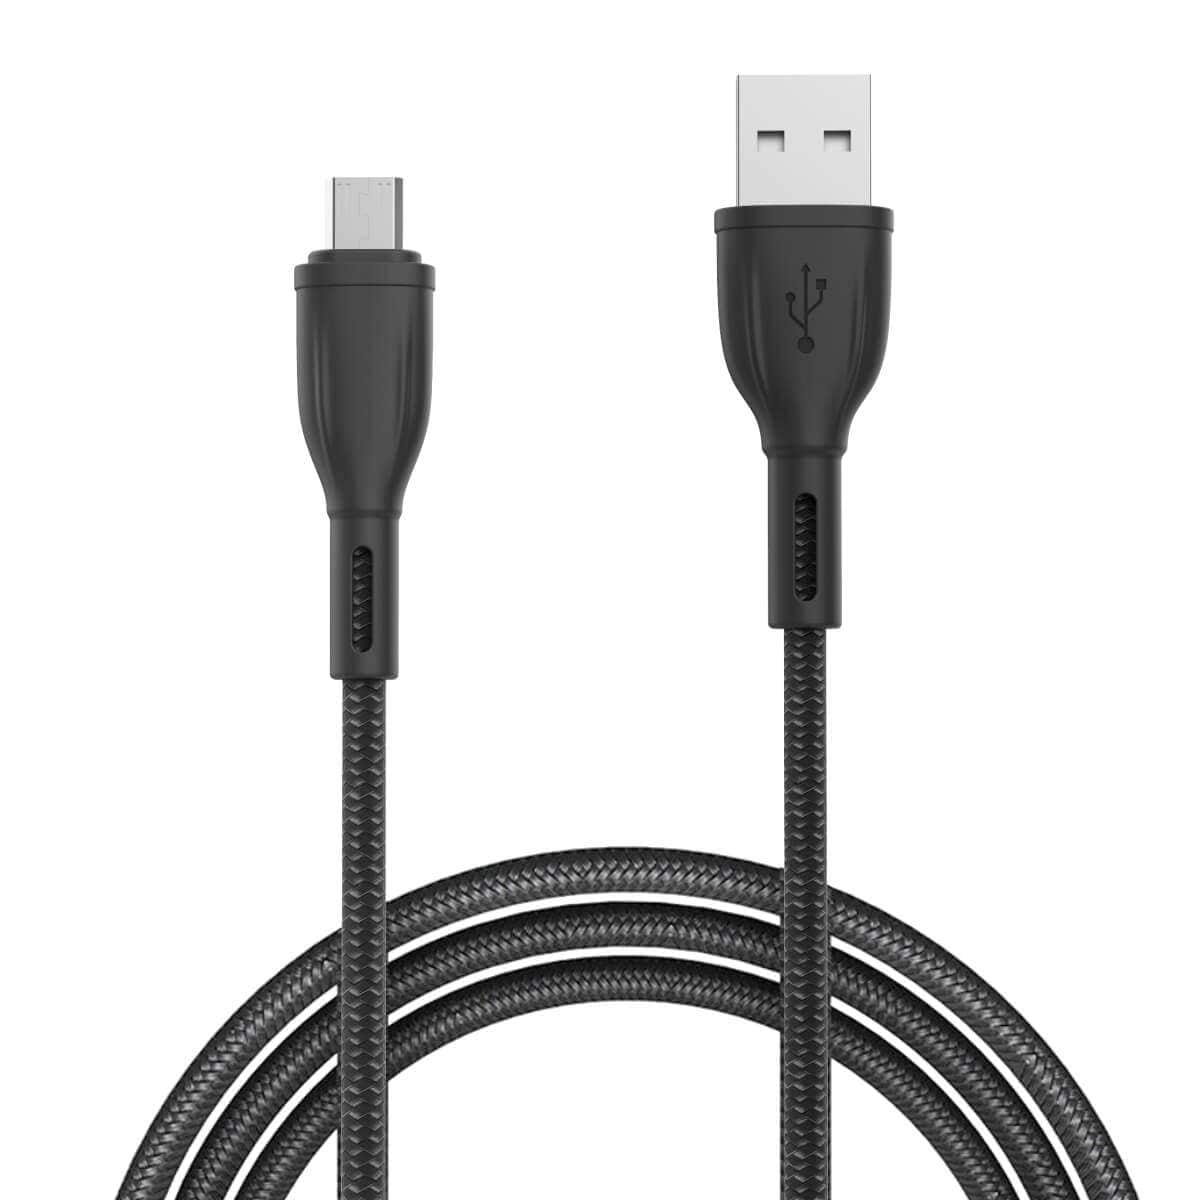 PORTRONICS-Konnect Plus Micro USB Cable